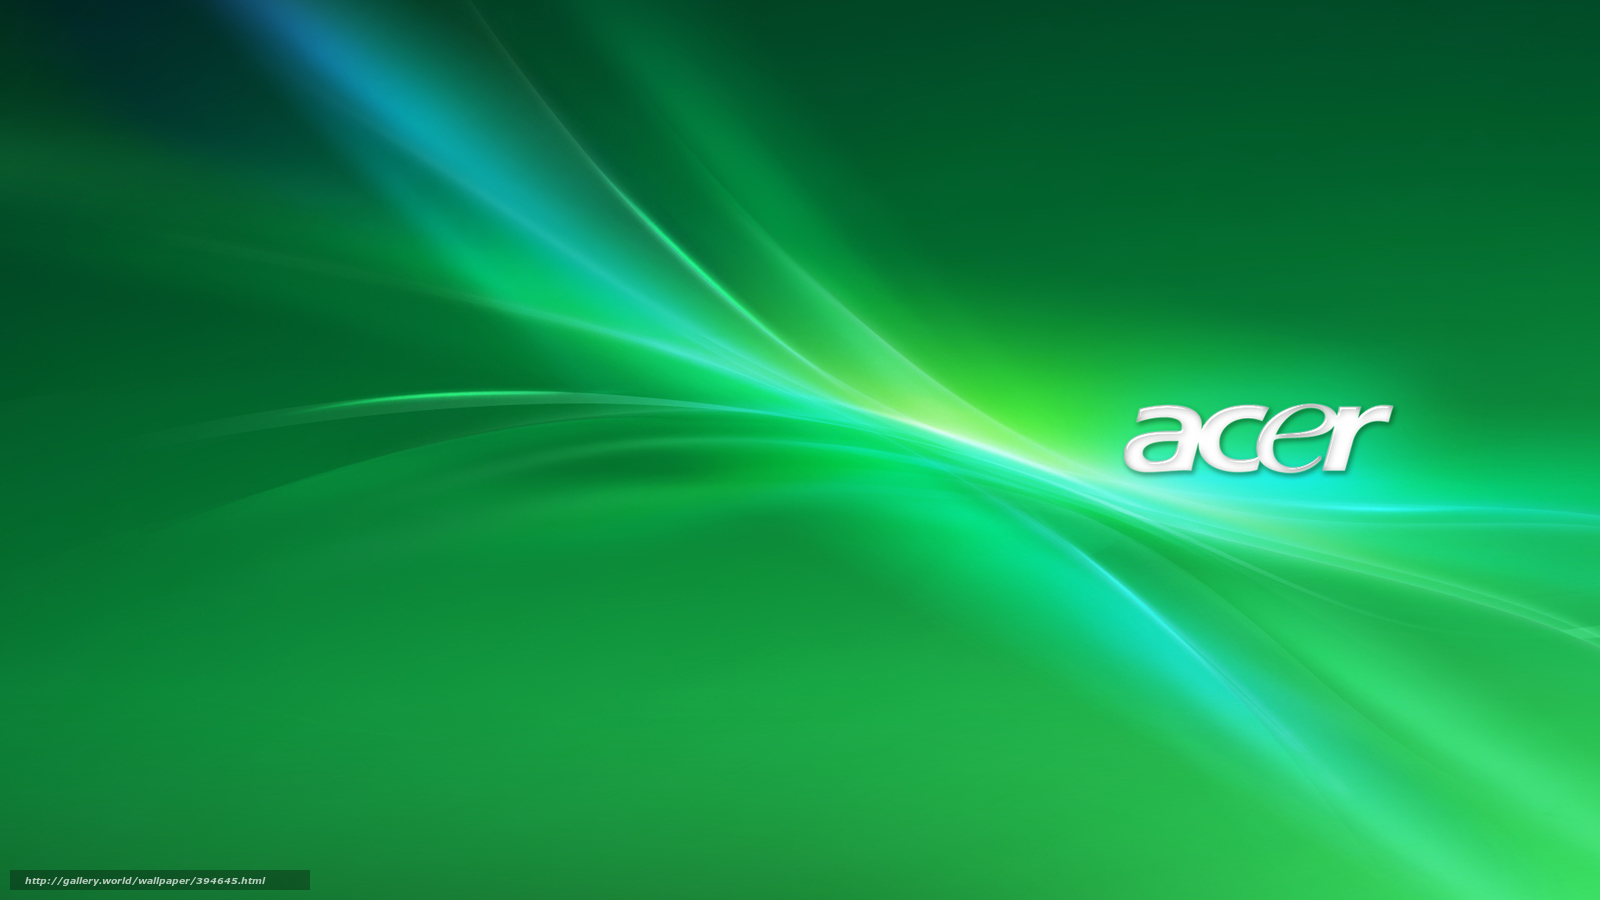 Wallpaper Acer Brand Name Notebook Desktop